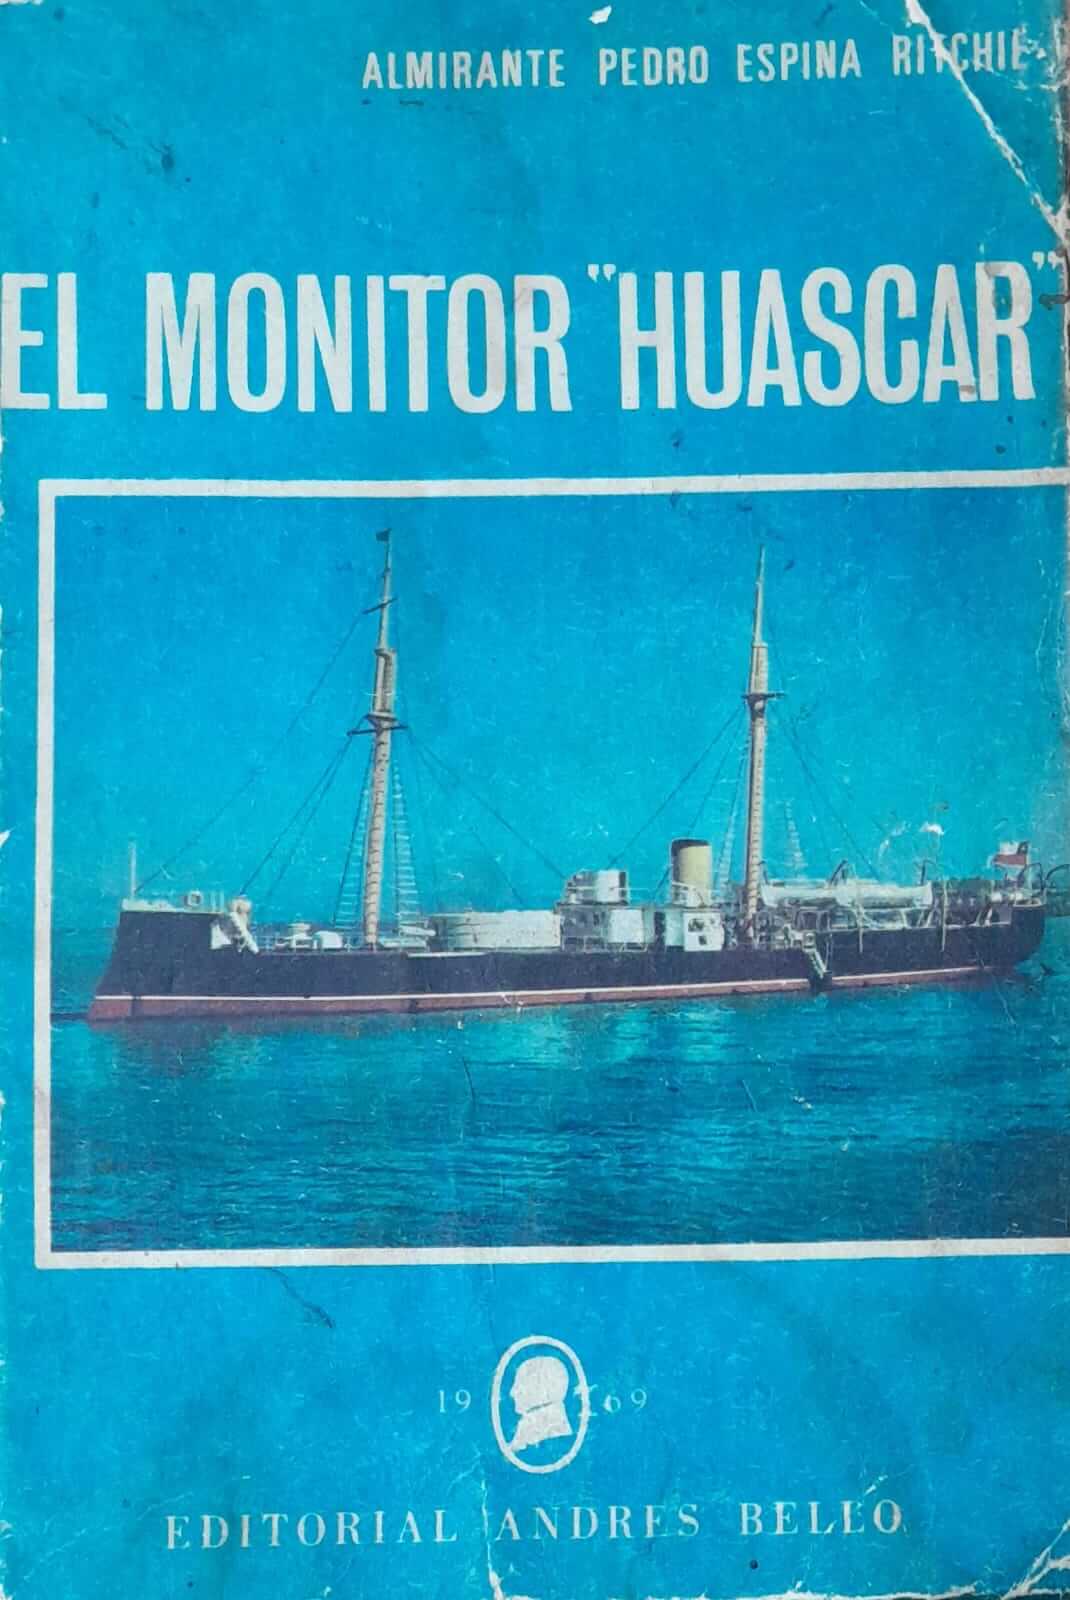 El Monitor Huascar